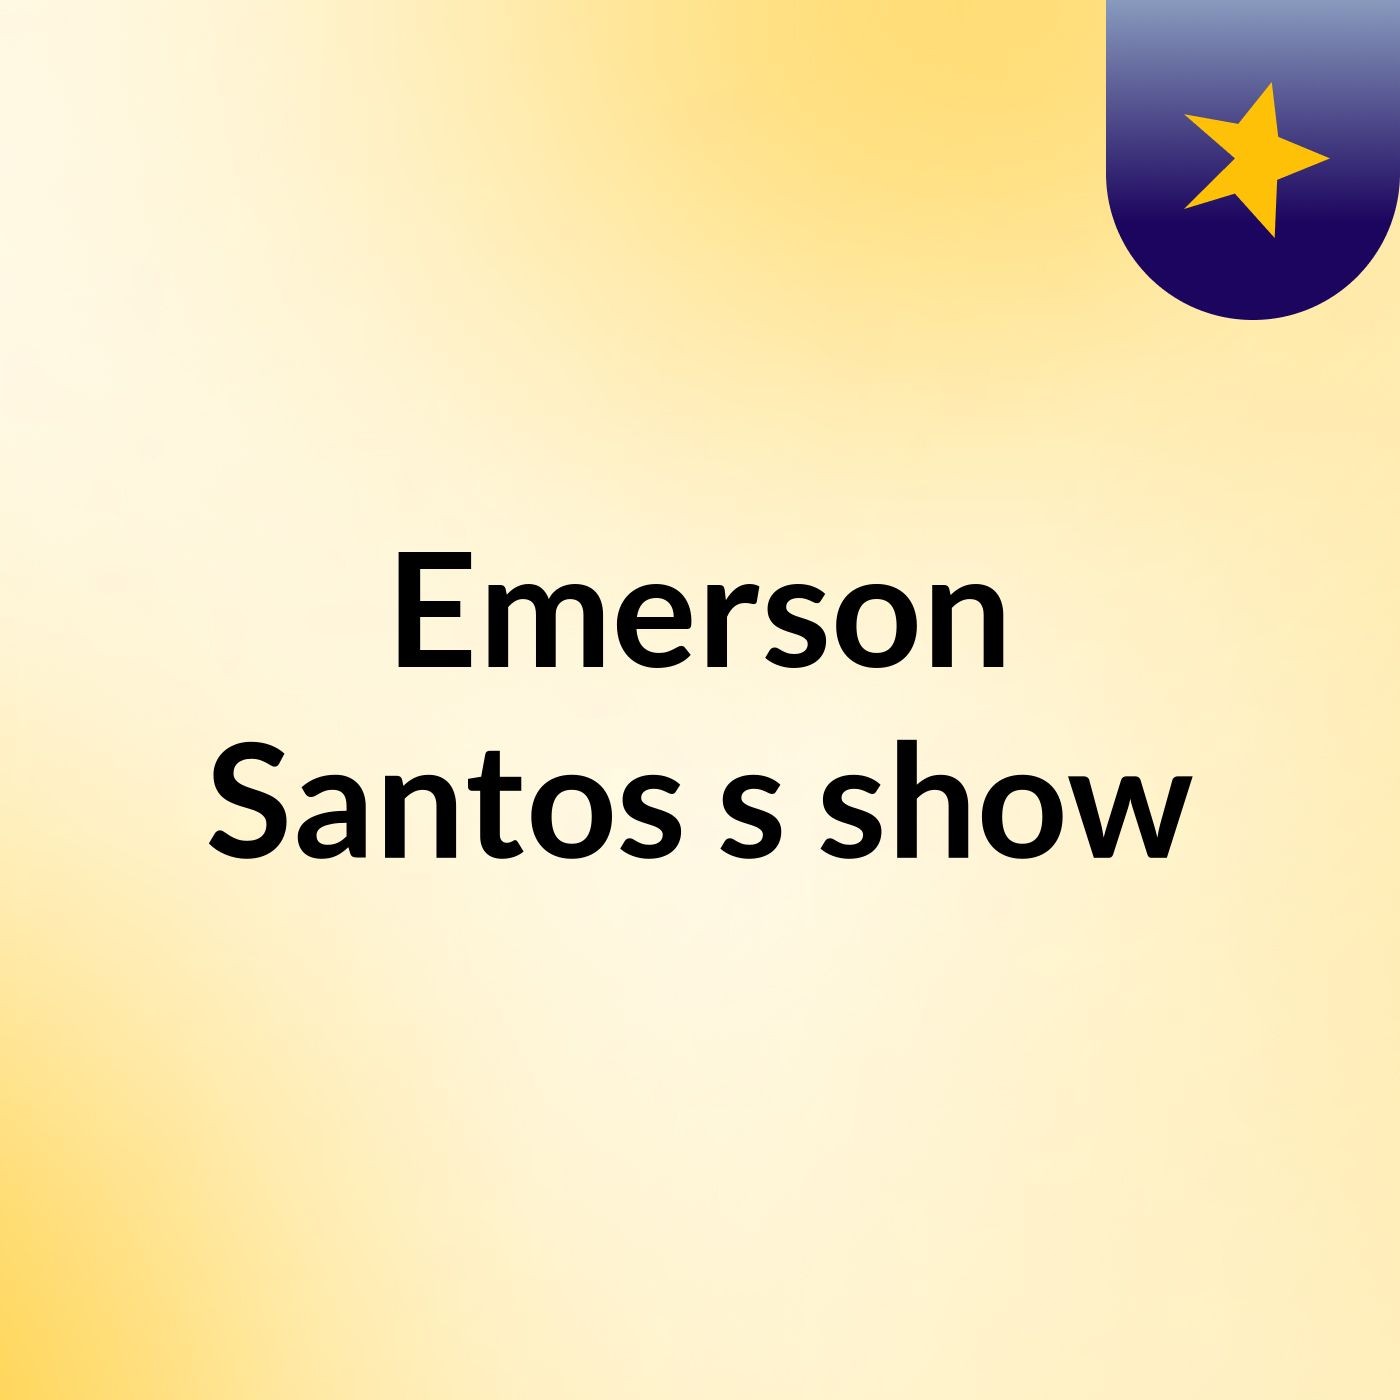 Emerson Santos's show